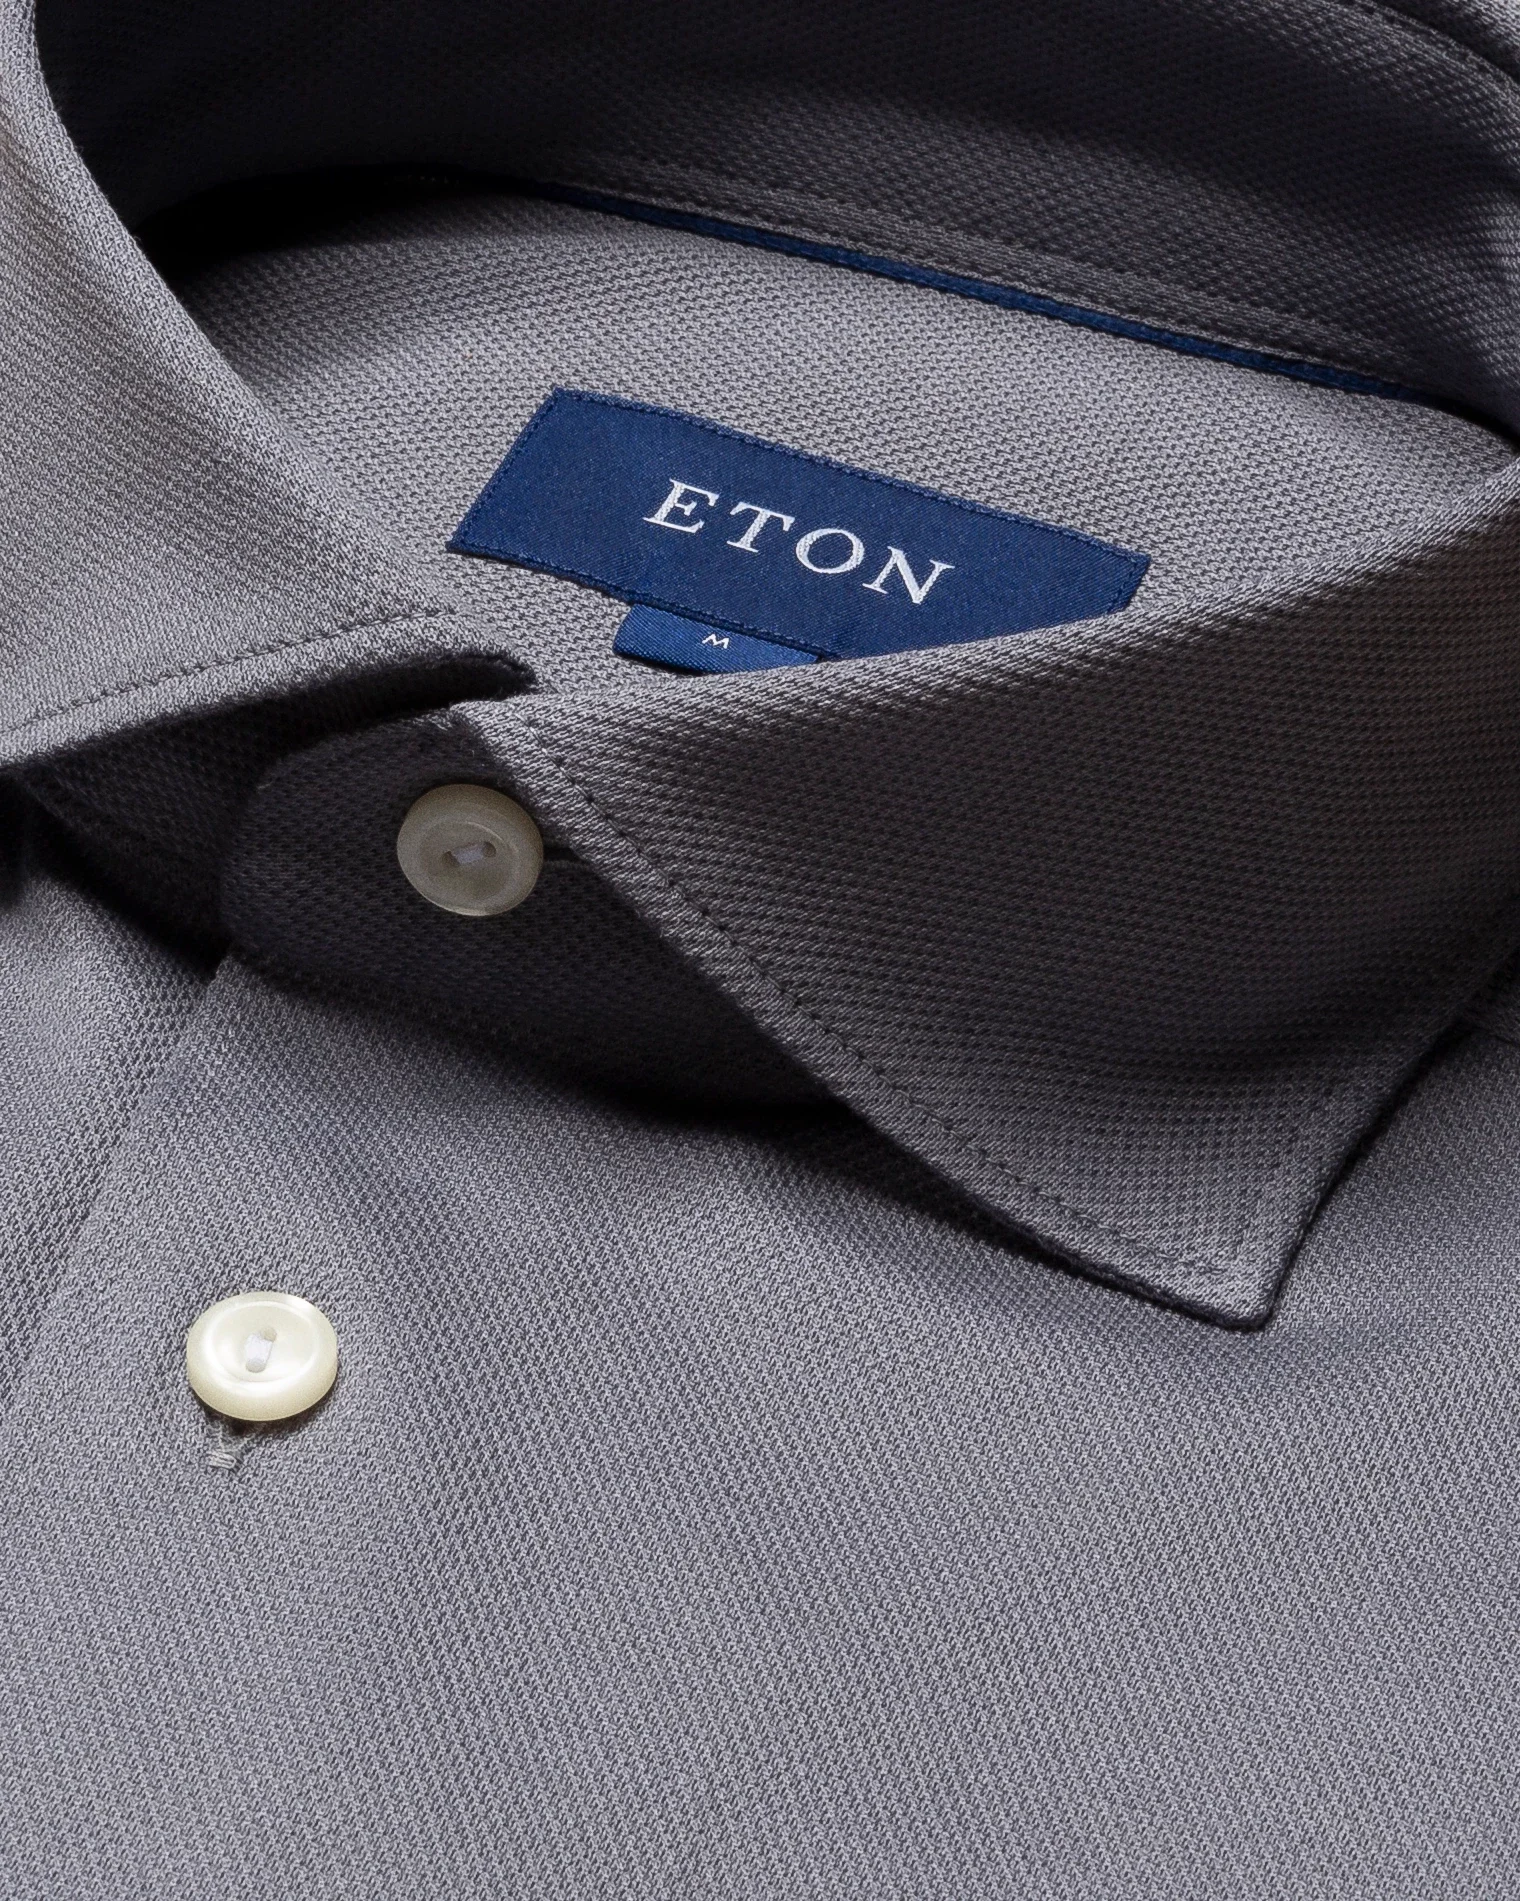 Eton - gray pique shirt